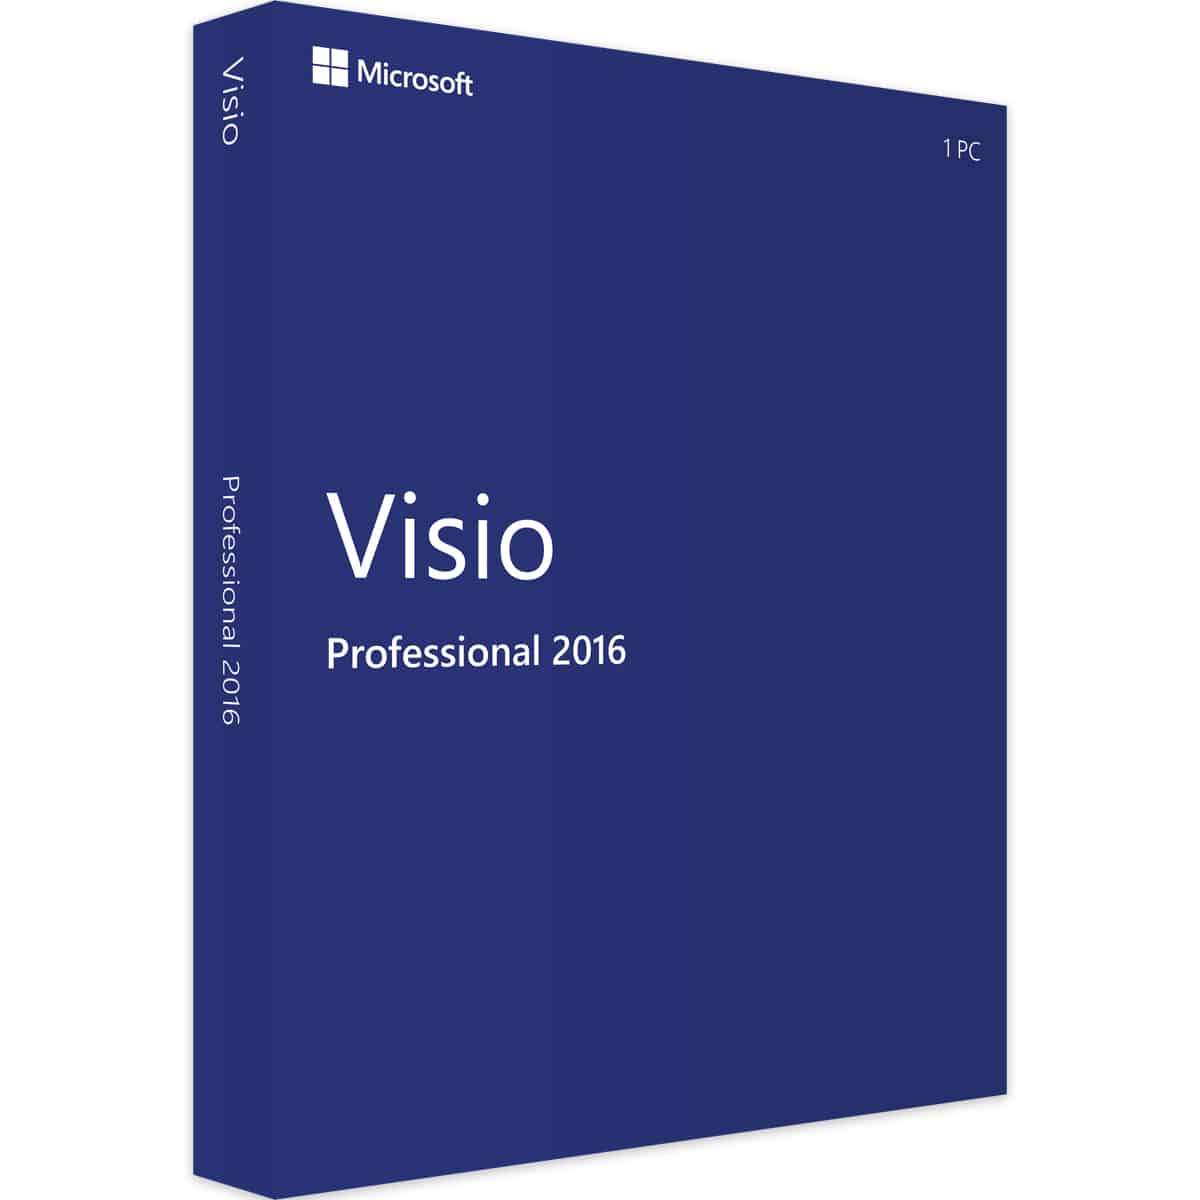 Microsoft Visio 2016 Professional Product key